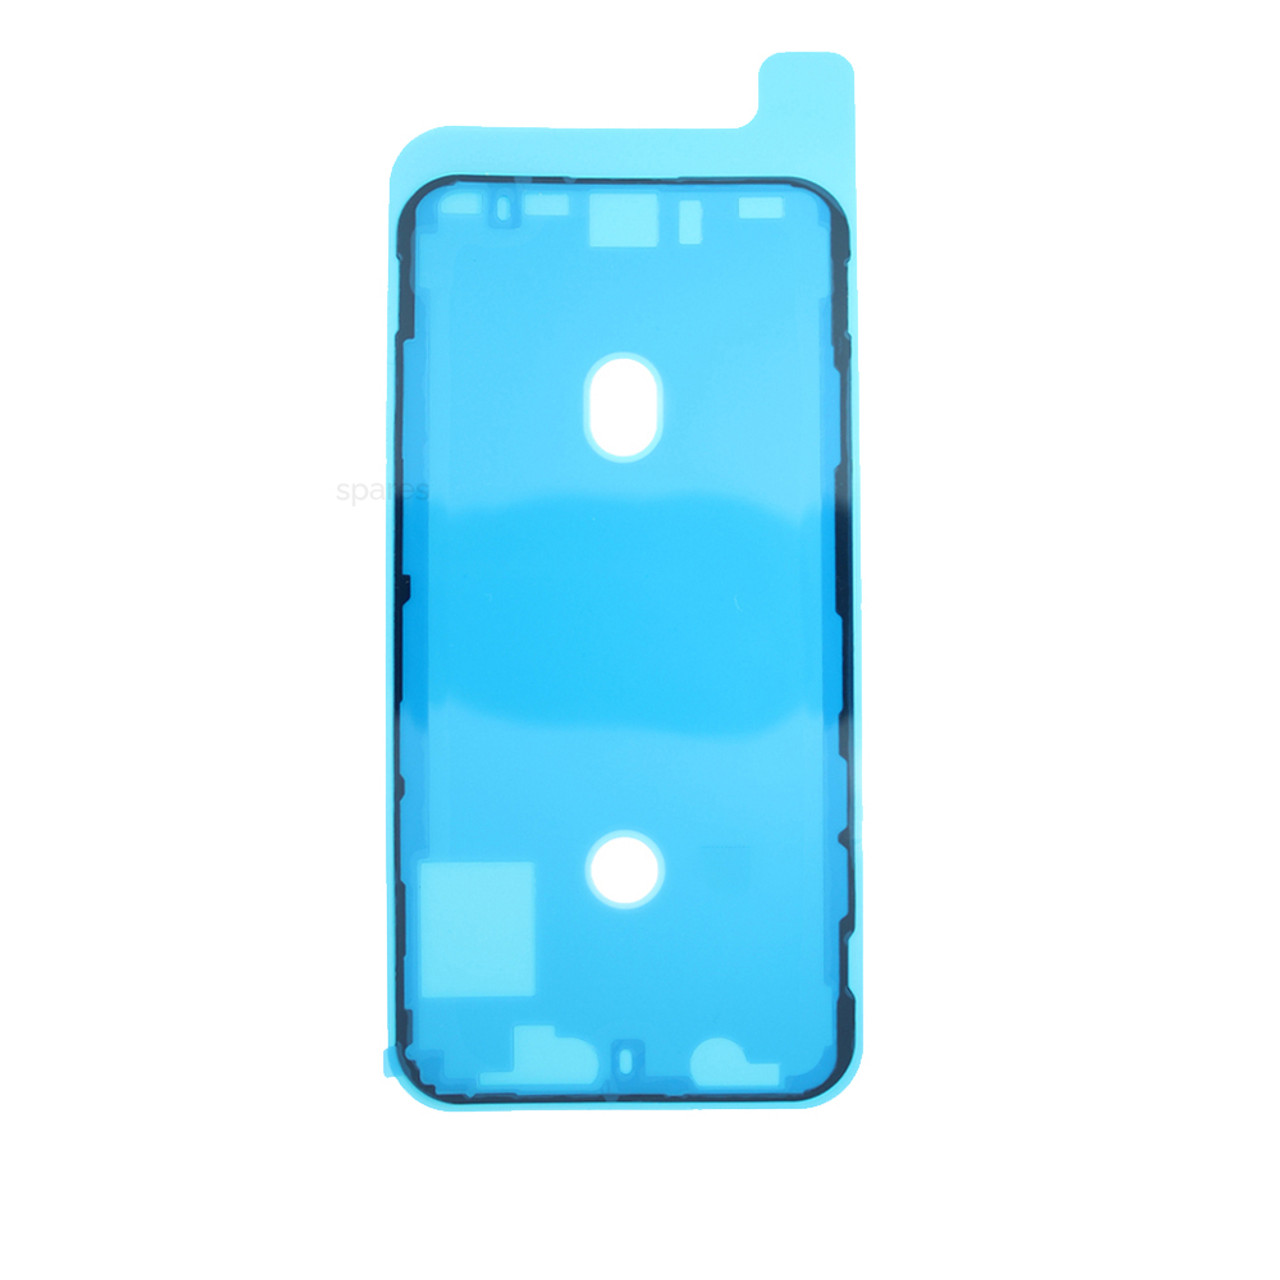 iPhone X Waterproof LCD Adhesive Seal Black Replacement